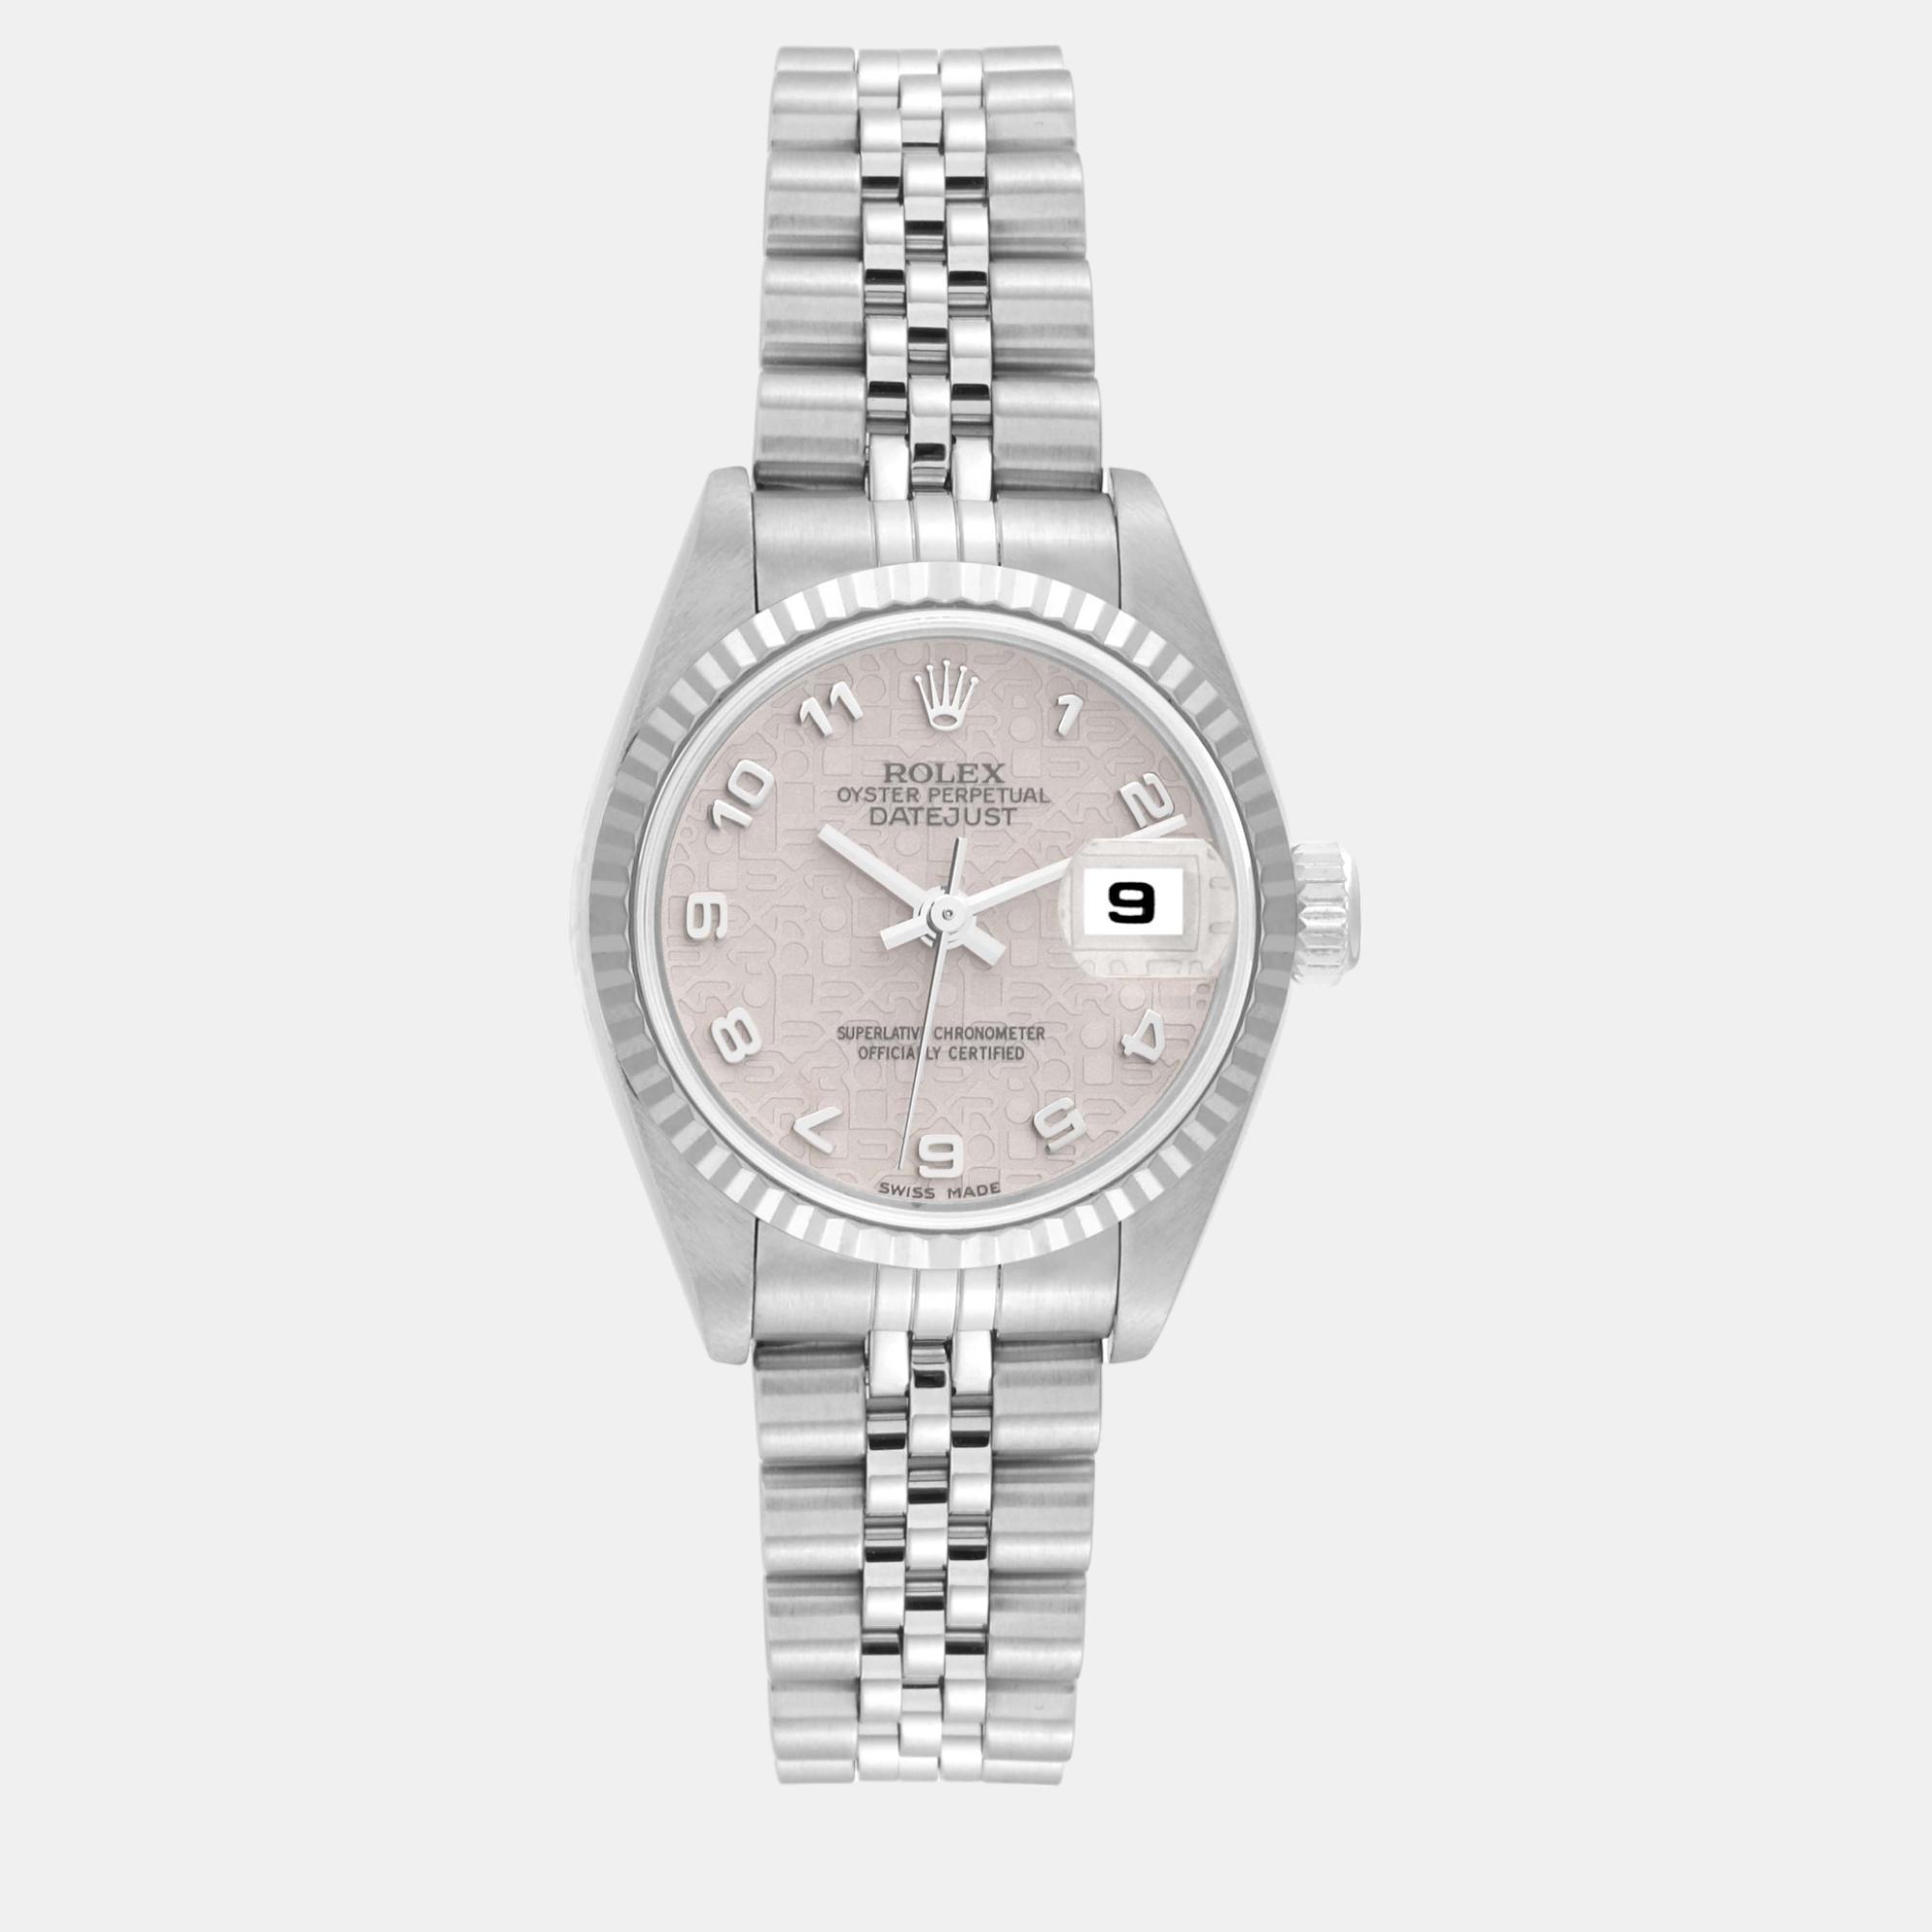 Rolex datejust steel white gold silver dial ladies watch 26.0 mm